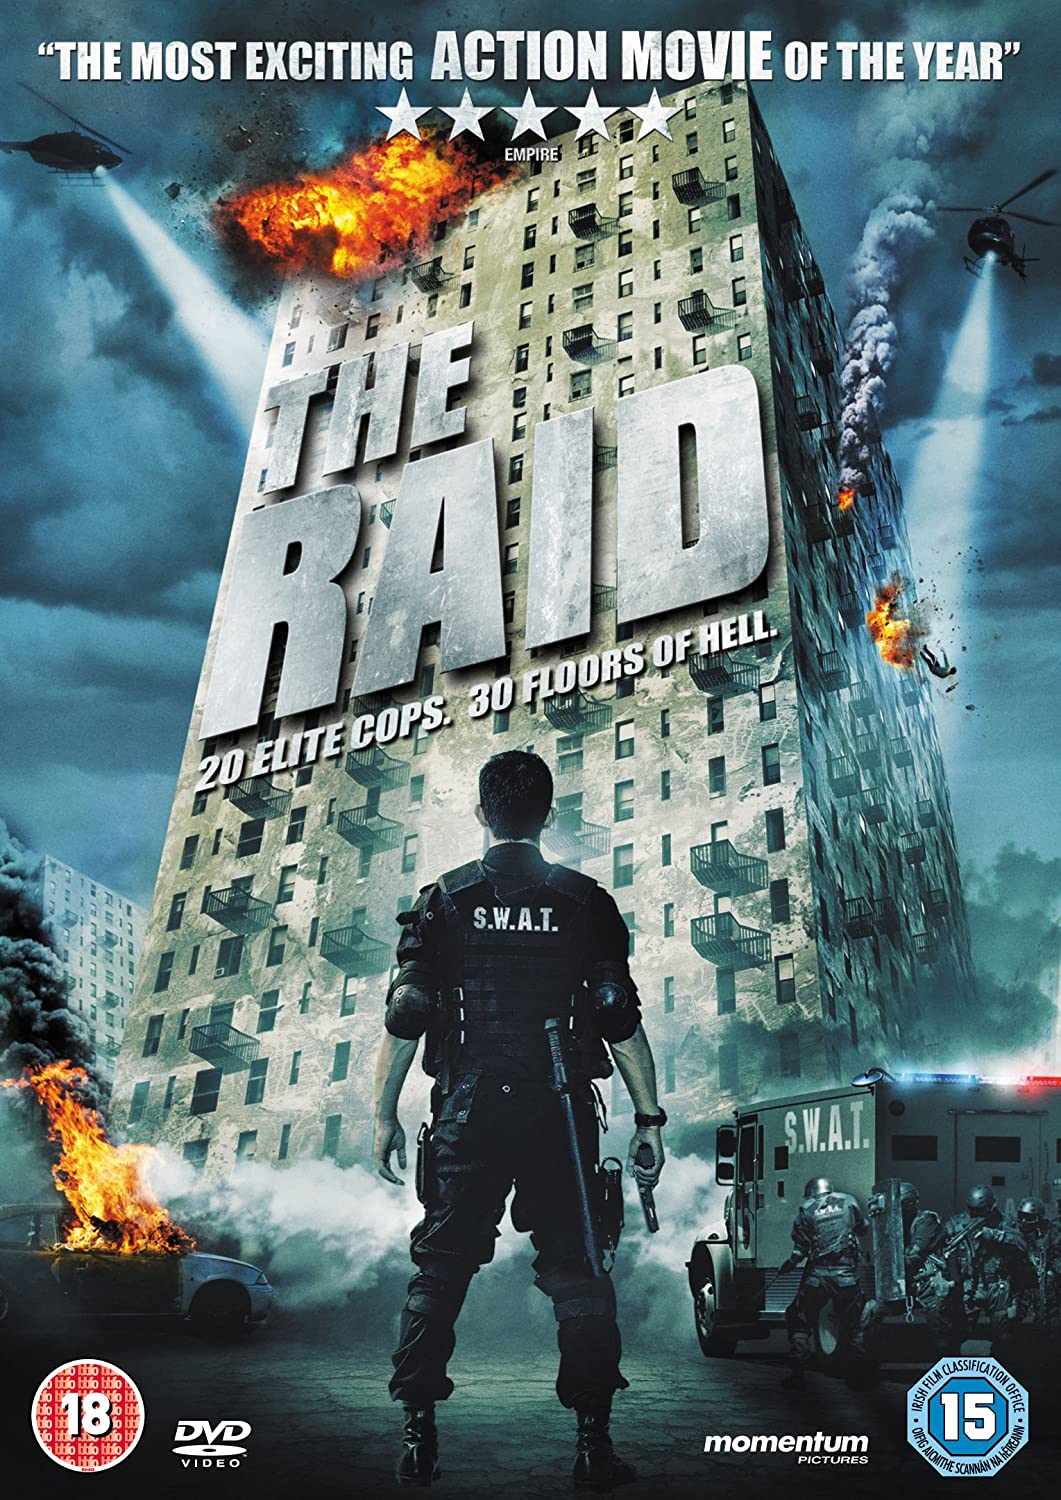 The Raid [2011] - Action/Martial Arts [DVD]